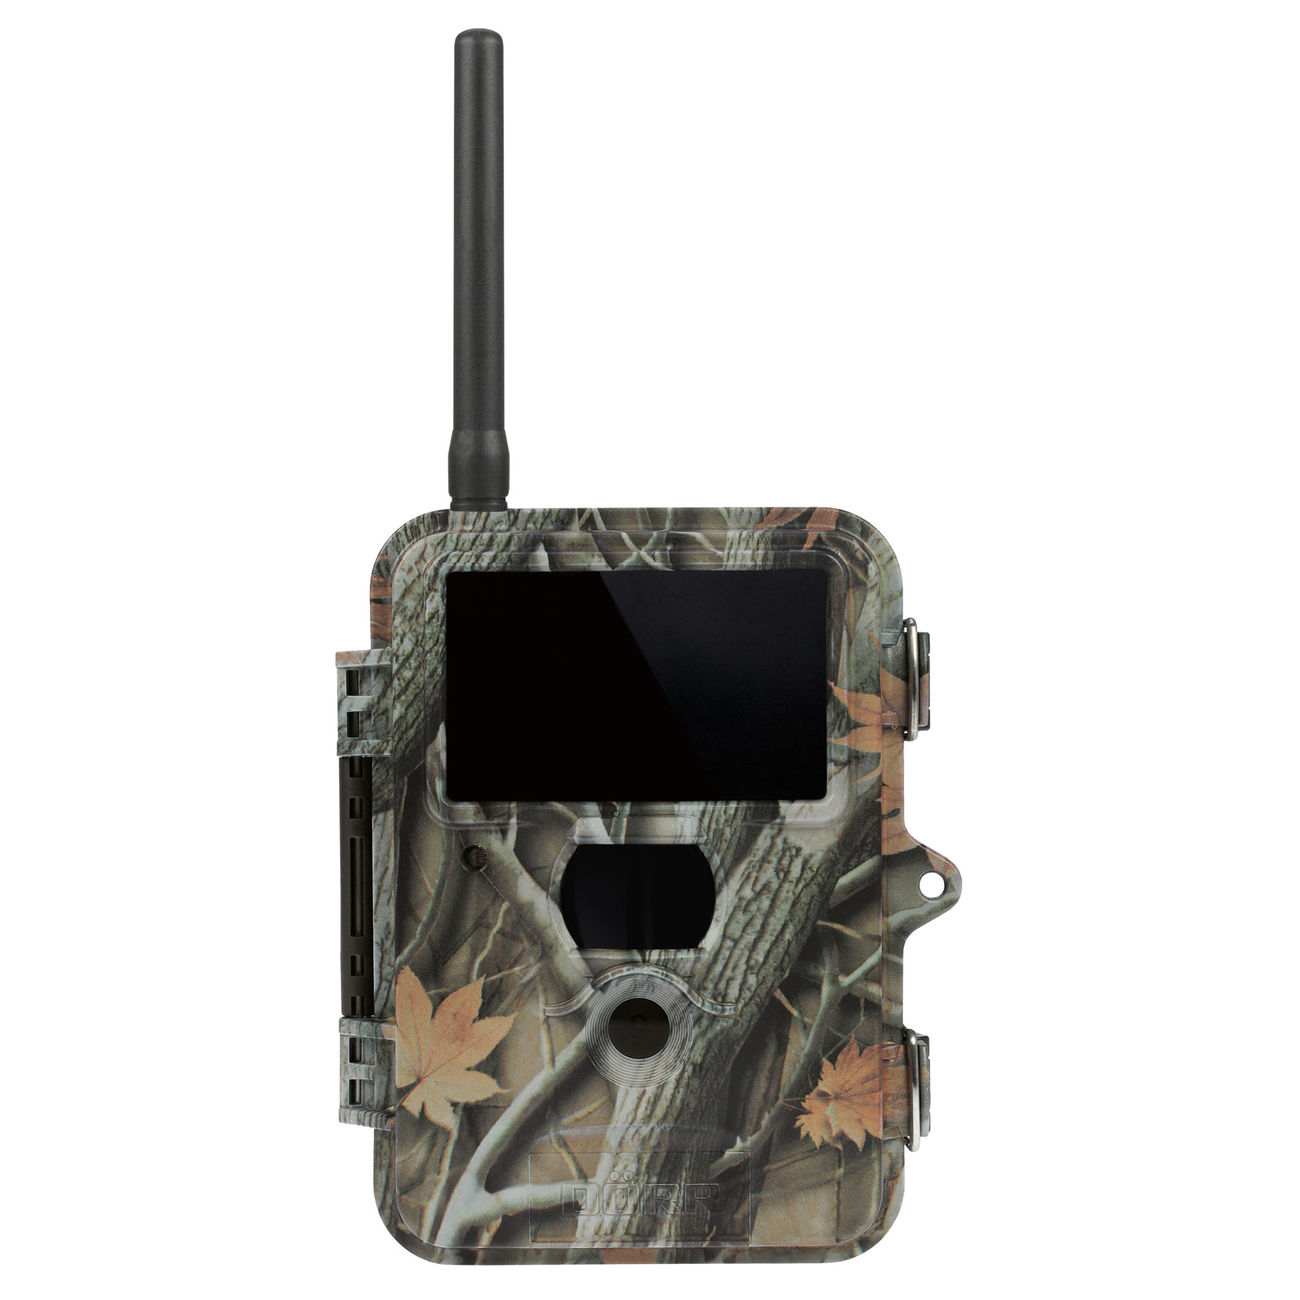 Dörr SnapShot Mobil Black 5.1 Infrarot Überwachungskamera camouflage